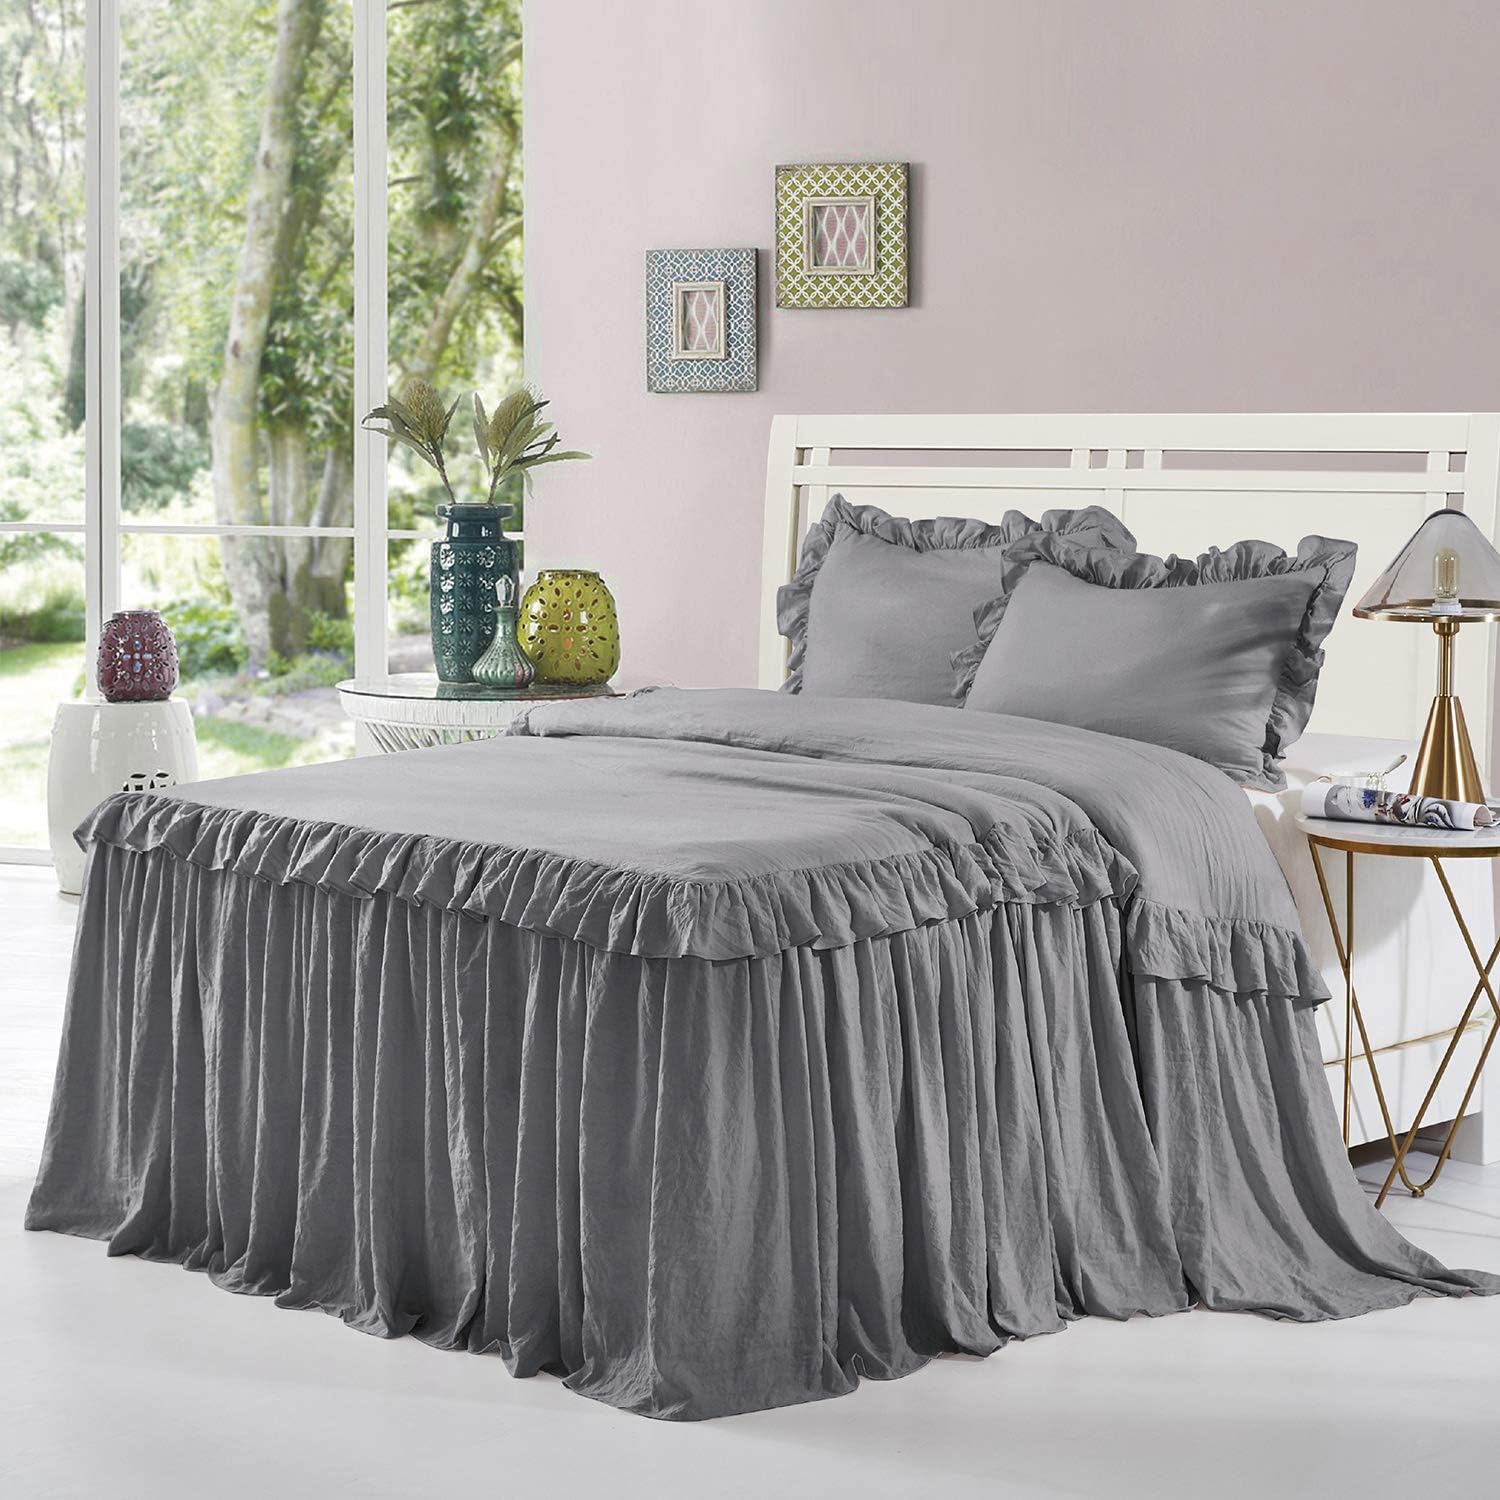 HIG 3 Piece Ruffle Skirt Bedspread Set King - Dark Gray 30 inches